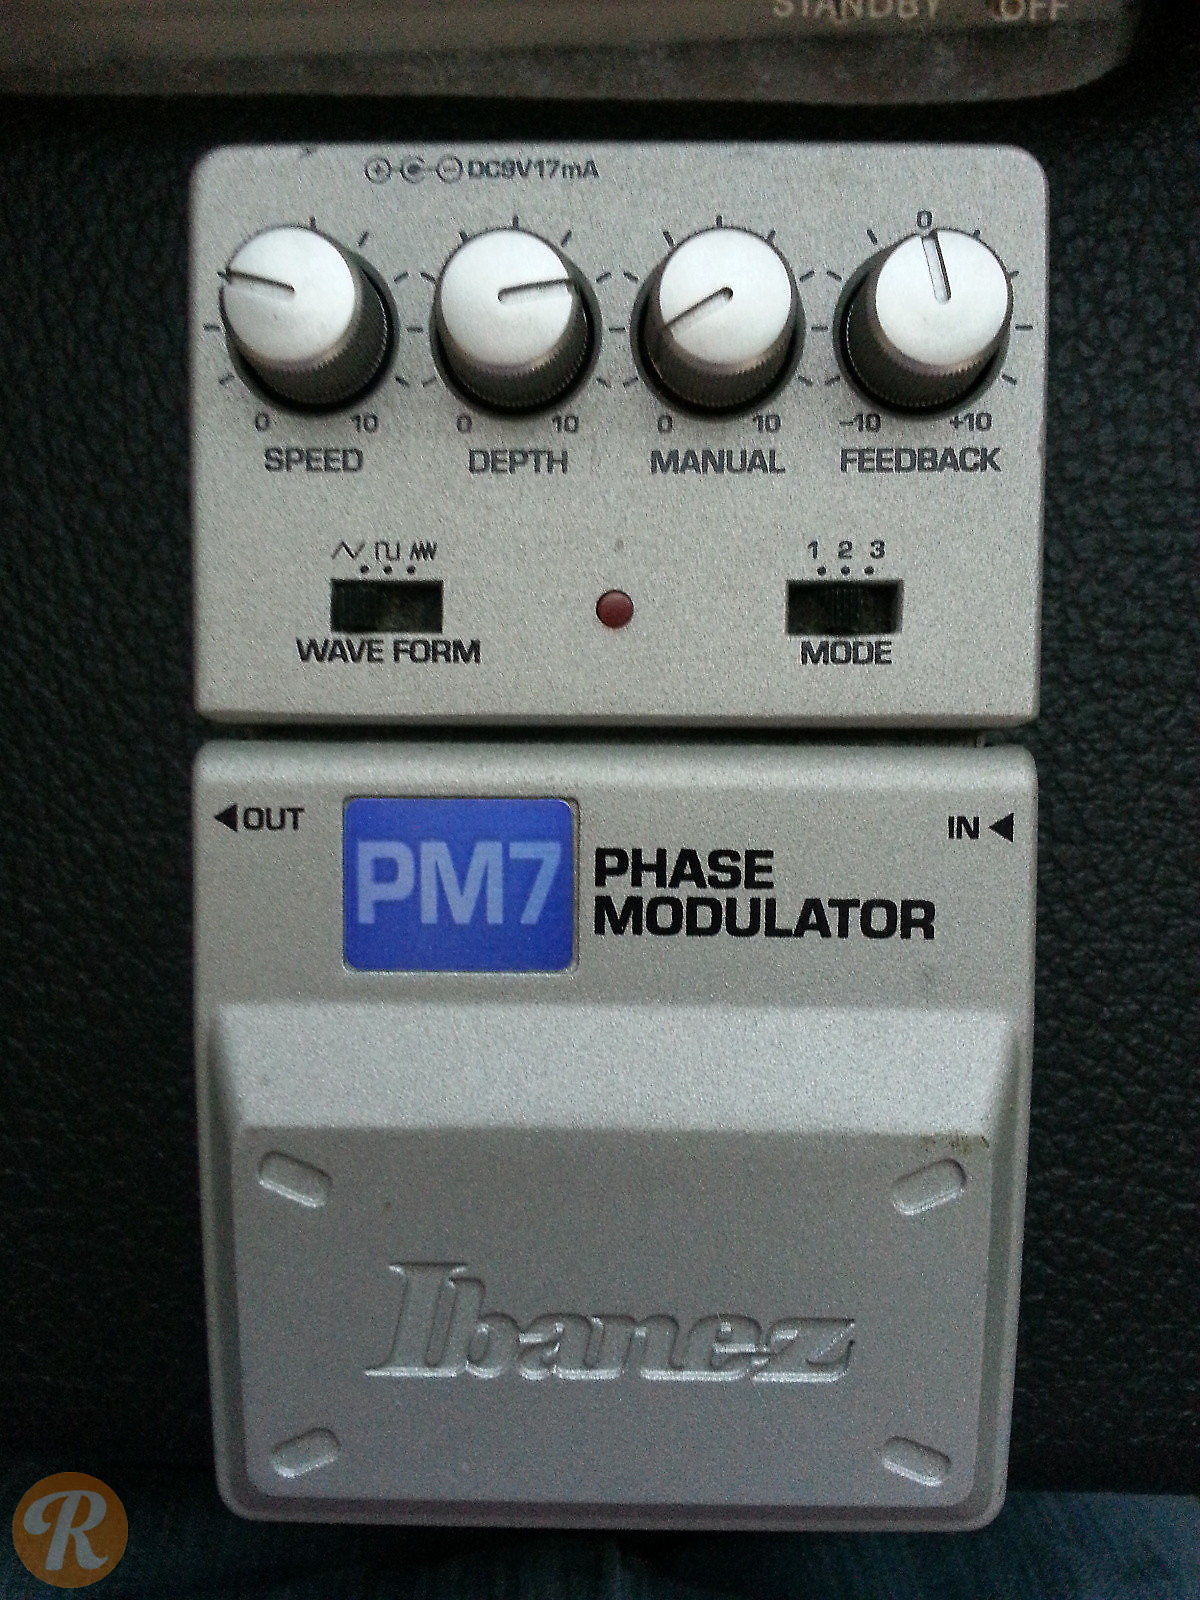 Ibanez PM7 Phase Modulator | Reverb